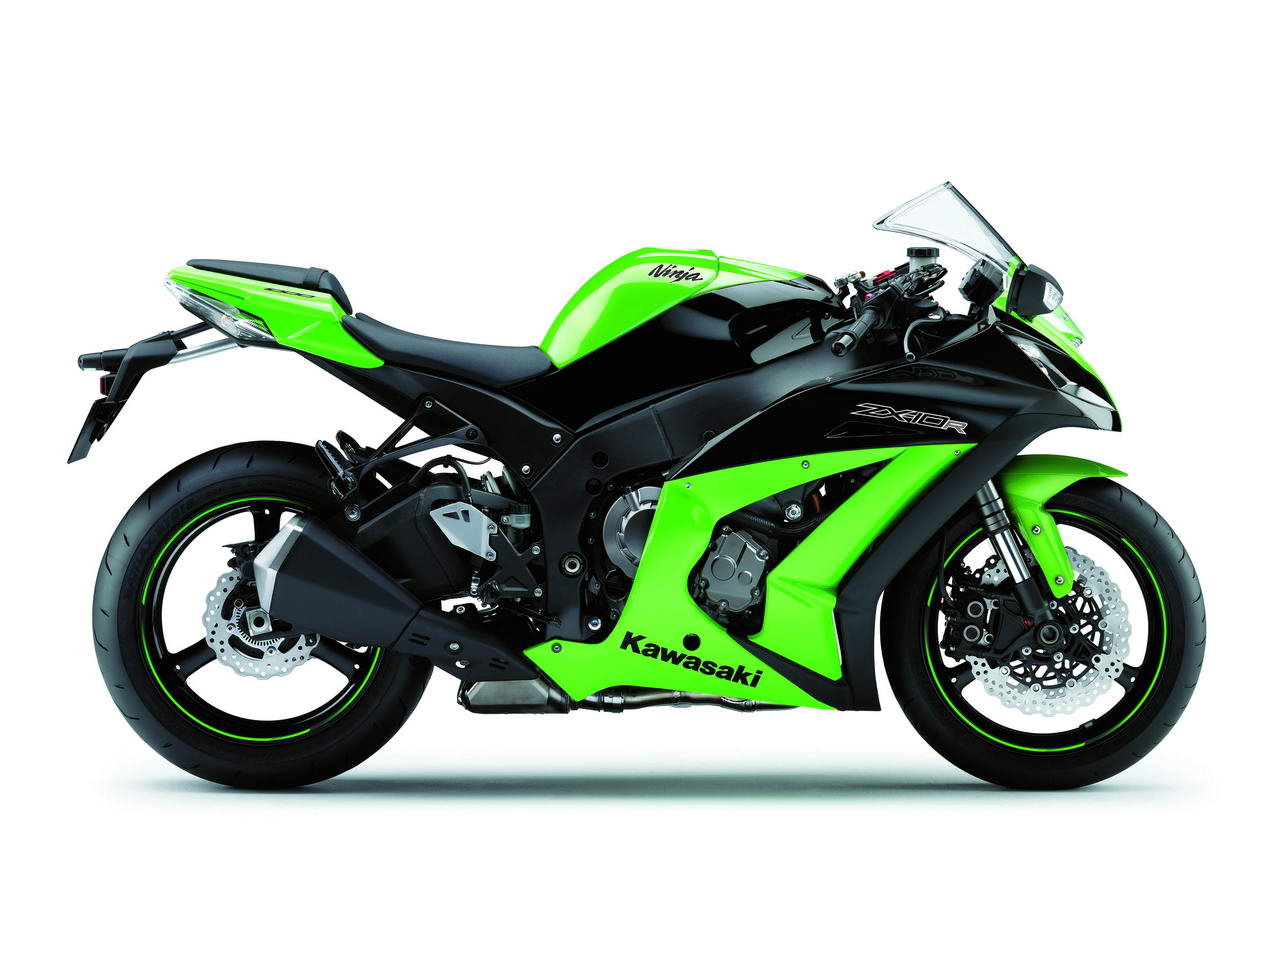 Listino Kawasaki KLX 125 Moto 50 e 125 - image 15514_kawasaki-ninjazx-10r-abs on https://moto.motori.net